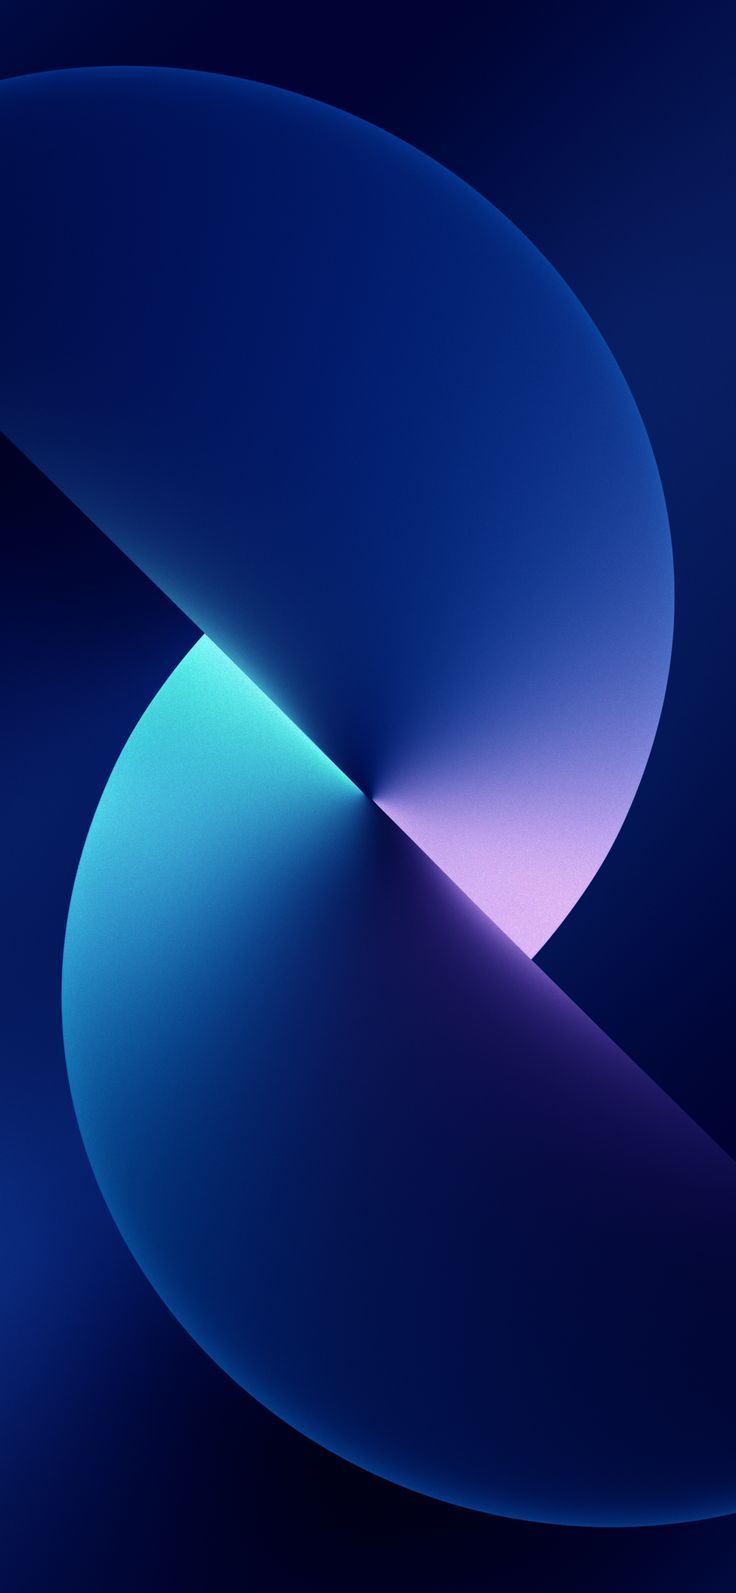 iOS 13 Wallpaper 4K Blue Stock iPadOS 795